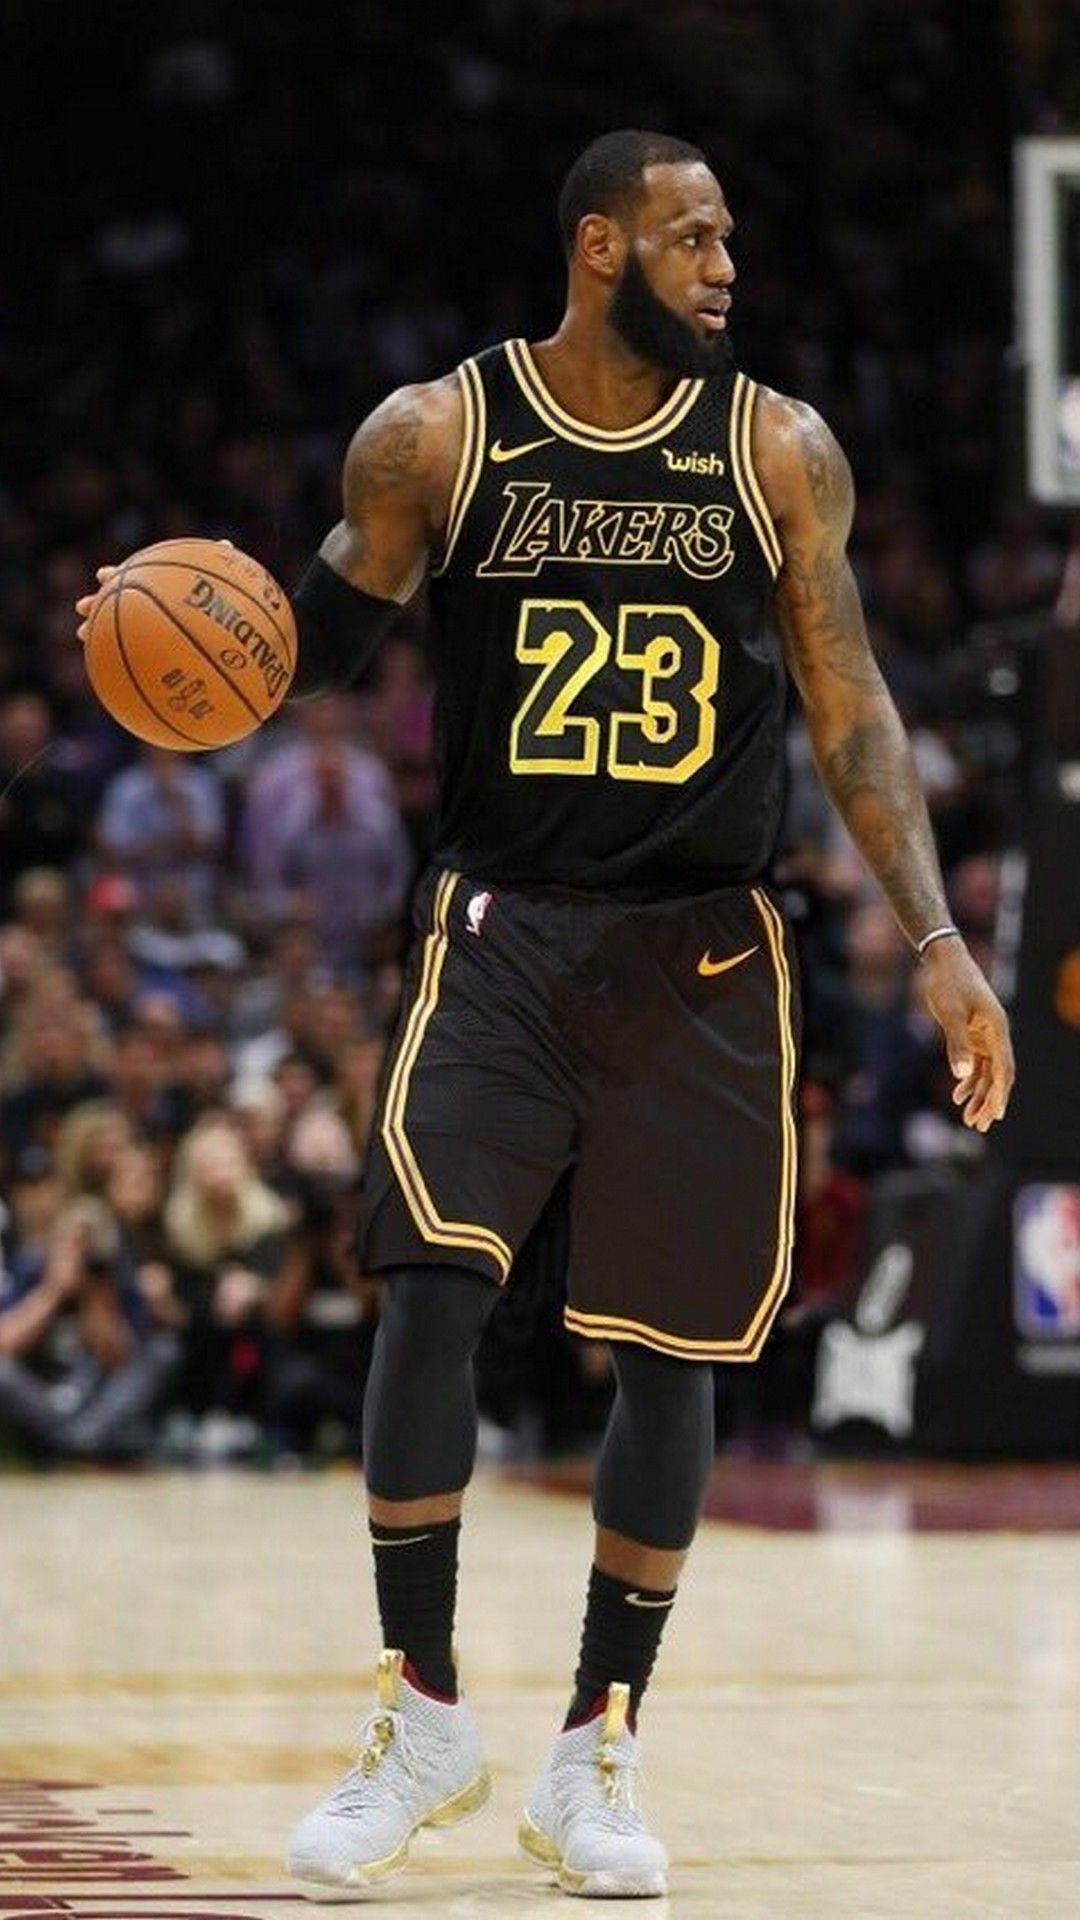 LeBron James LA Lakers iPhone 6 Wallpaper Basketball Wallpaper. Lebron james lakers, Lebron james, Lebron james wallpaper